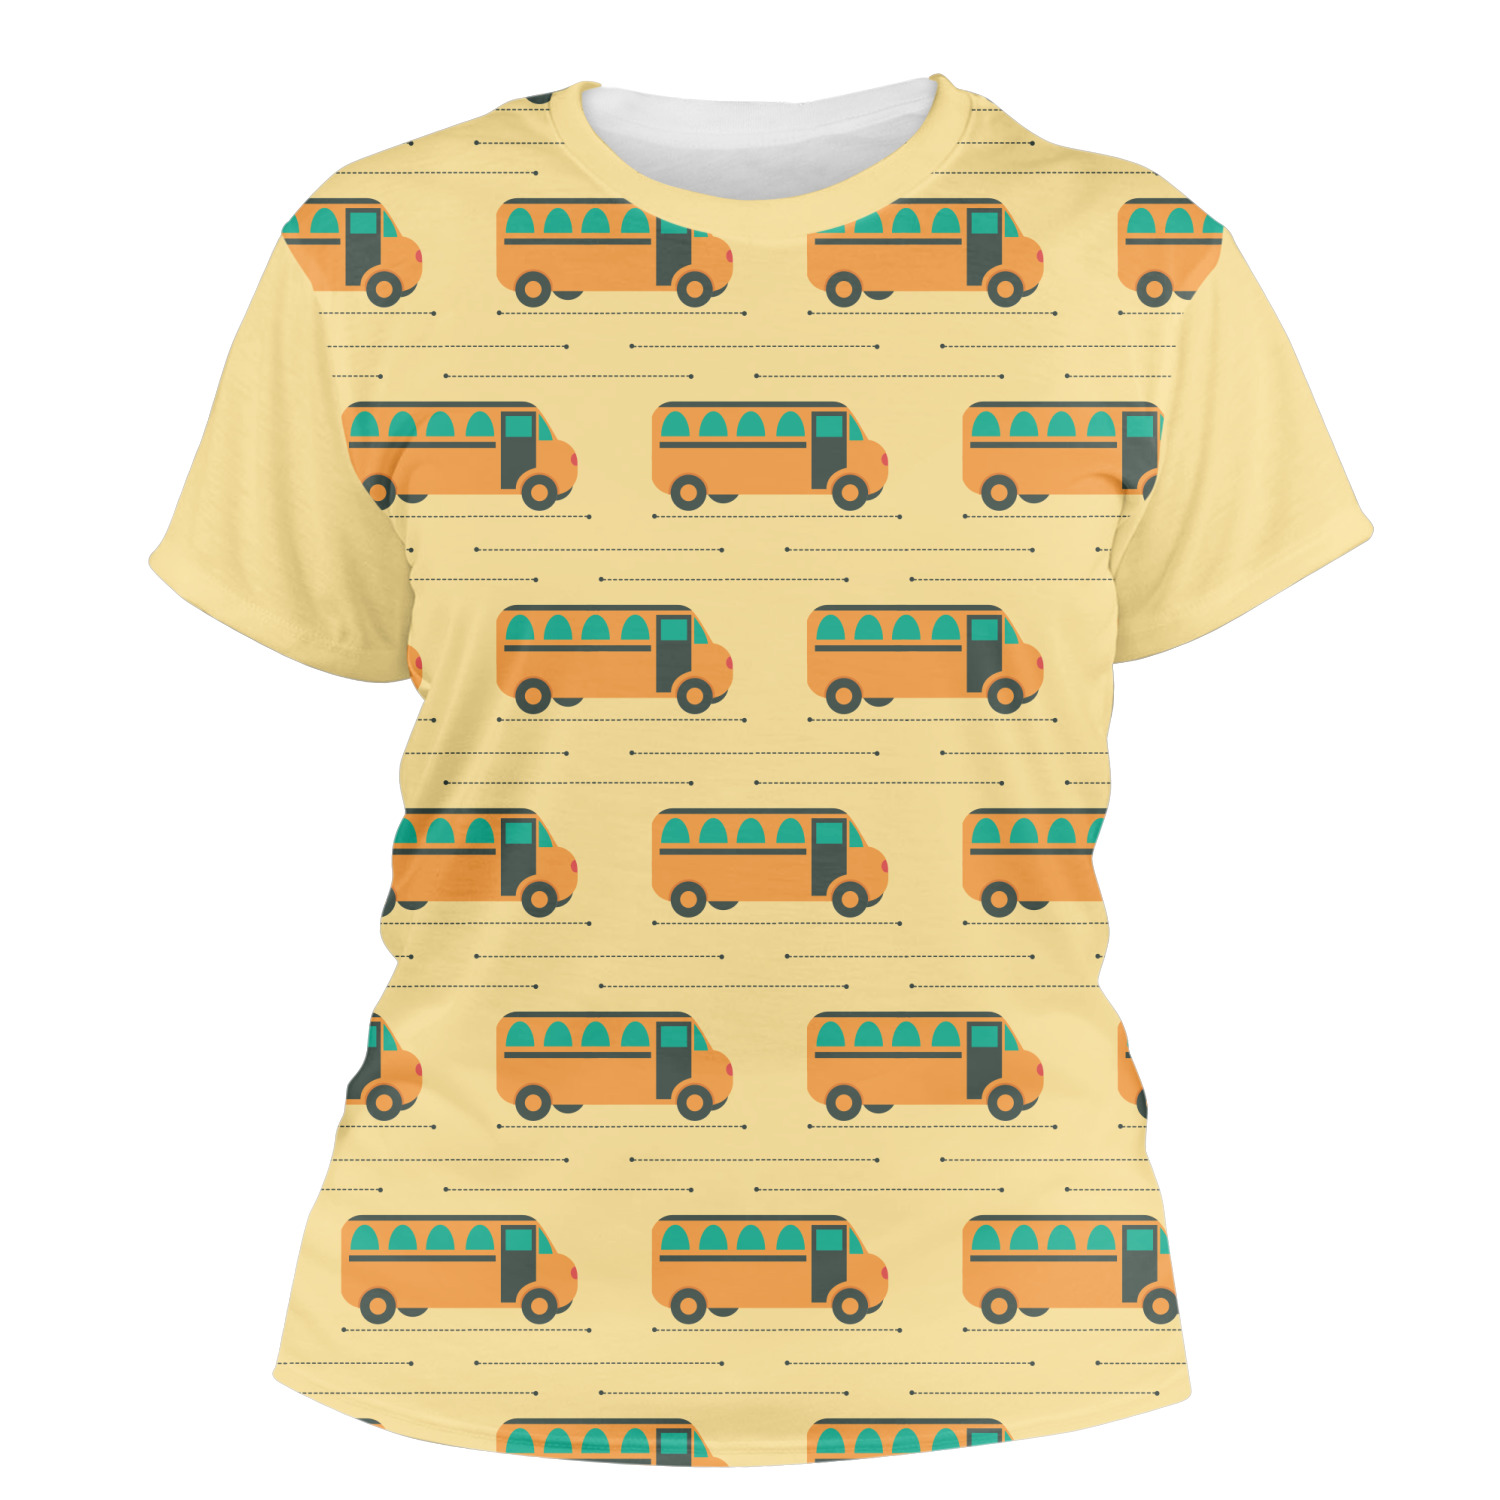 bus uniform with polo shirt